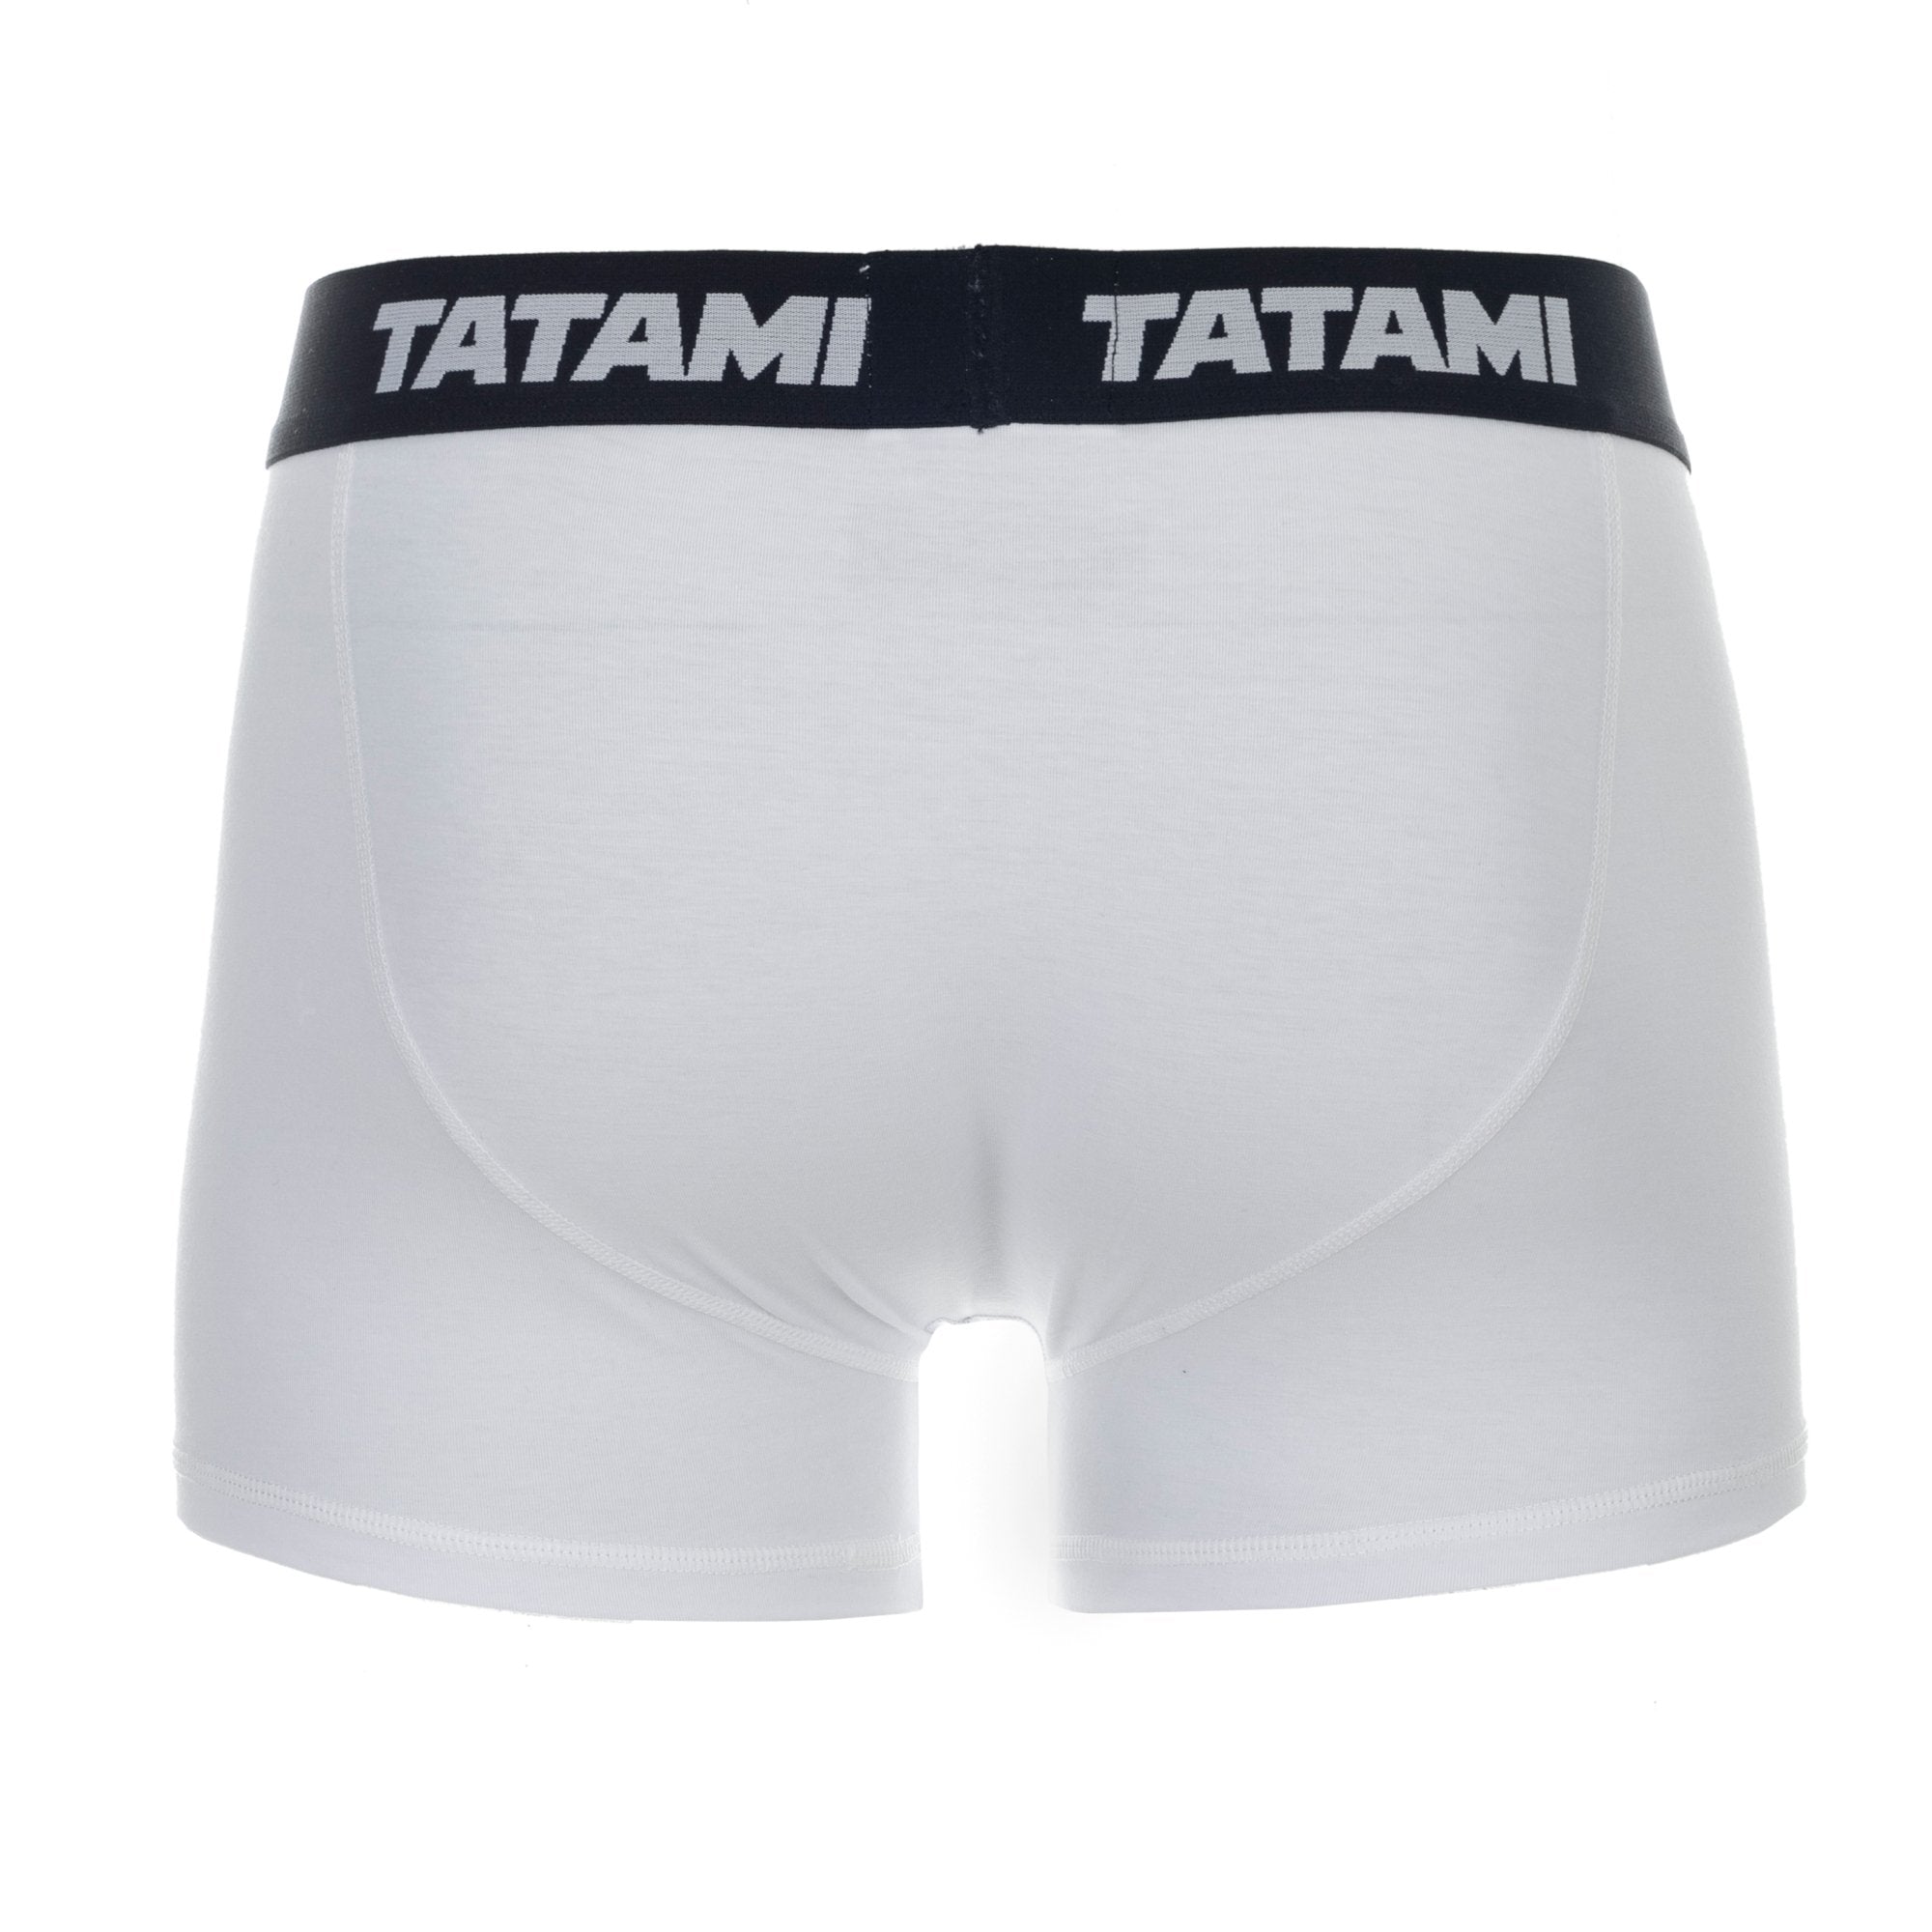 TATAMI Mens Boxer Shorts 3 Pack